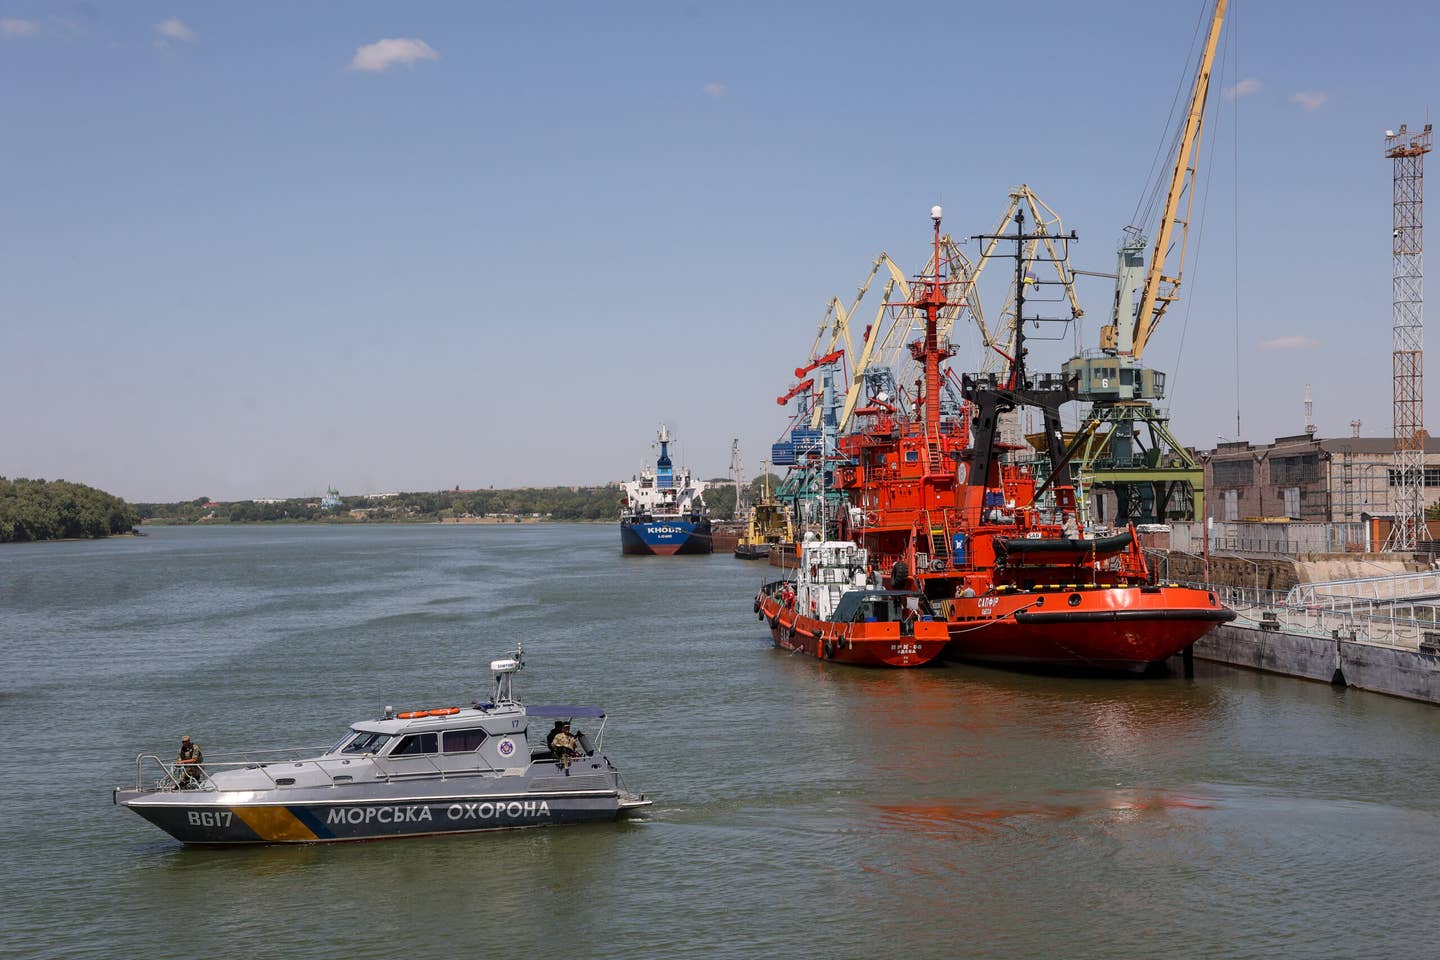 A Ukrainian Sea Guard motorboat at Izmail port on the Danube River, in Odesa region, Ukraine, July 21, 2022. <em>Photo by Sergii Kharchenko/NurPhoto via Getty Images</em>